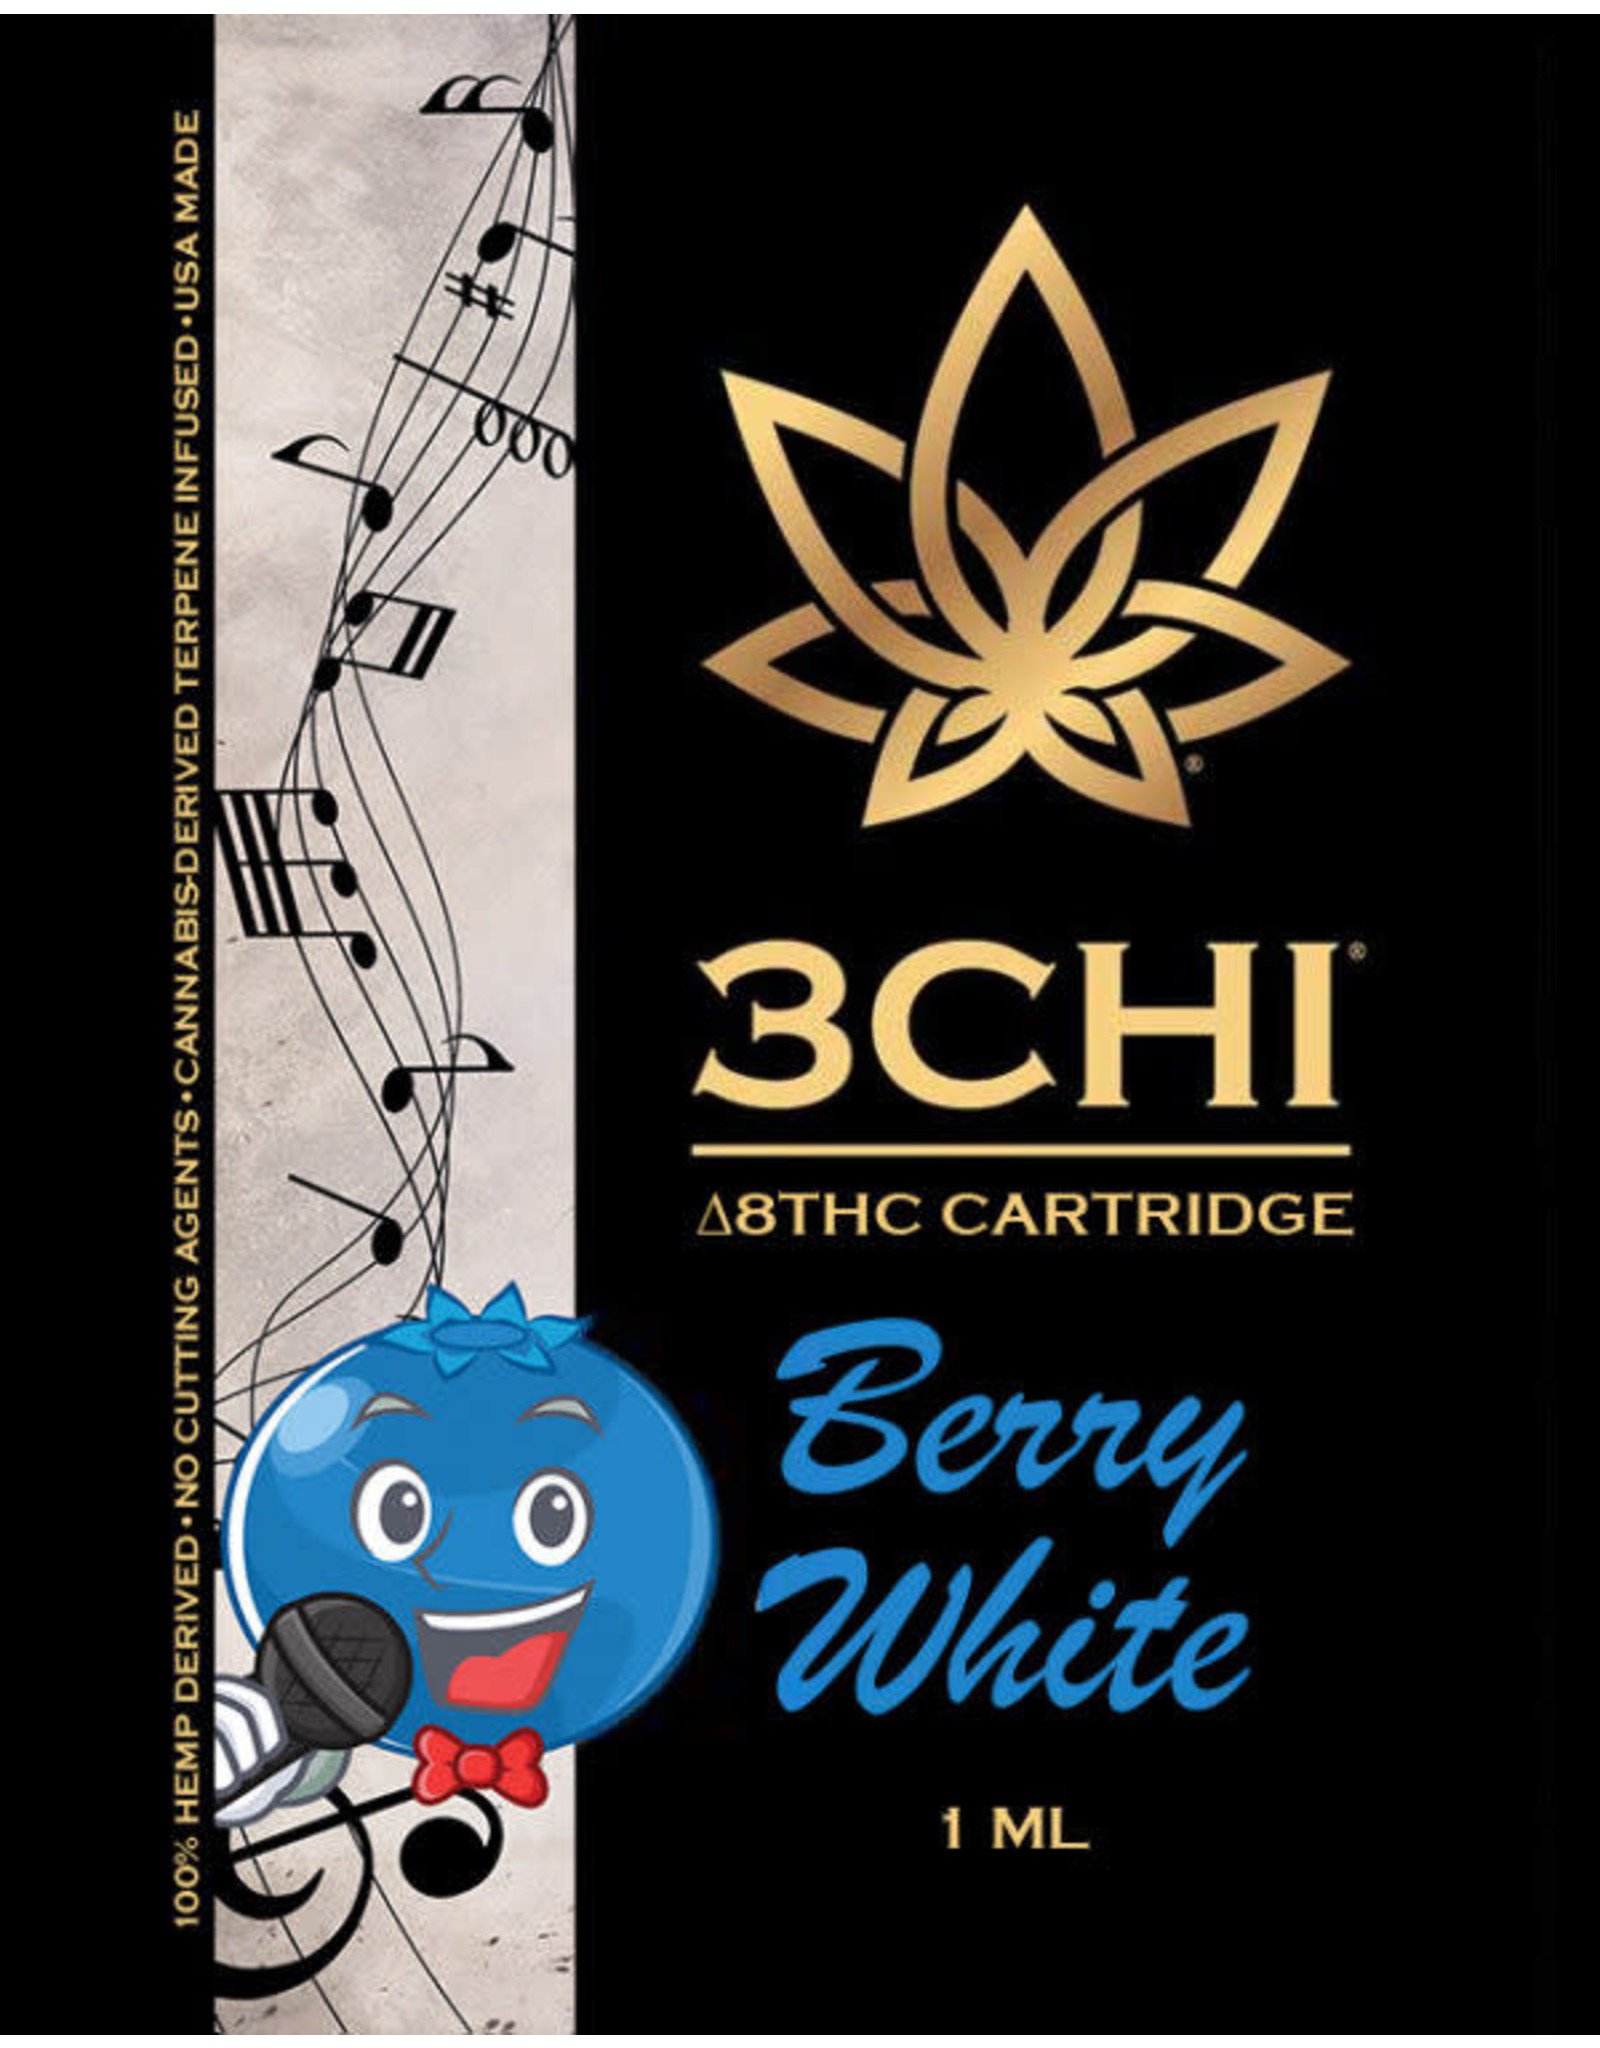 3CHI 3CHI Delta 8 THC Vape Cartridge- Berry white